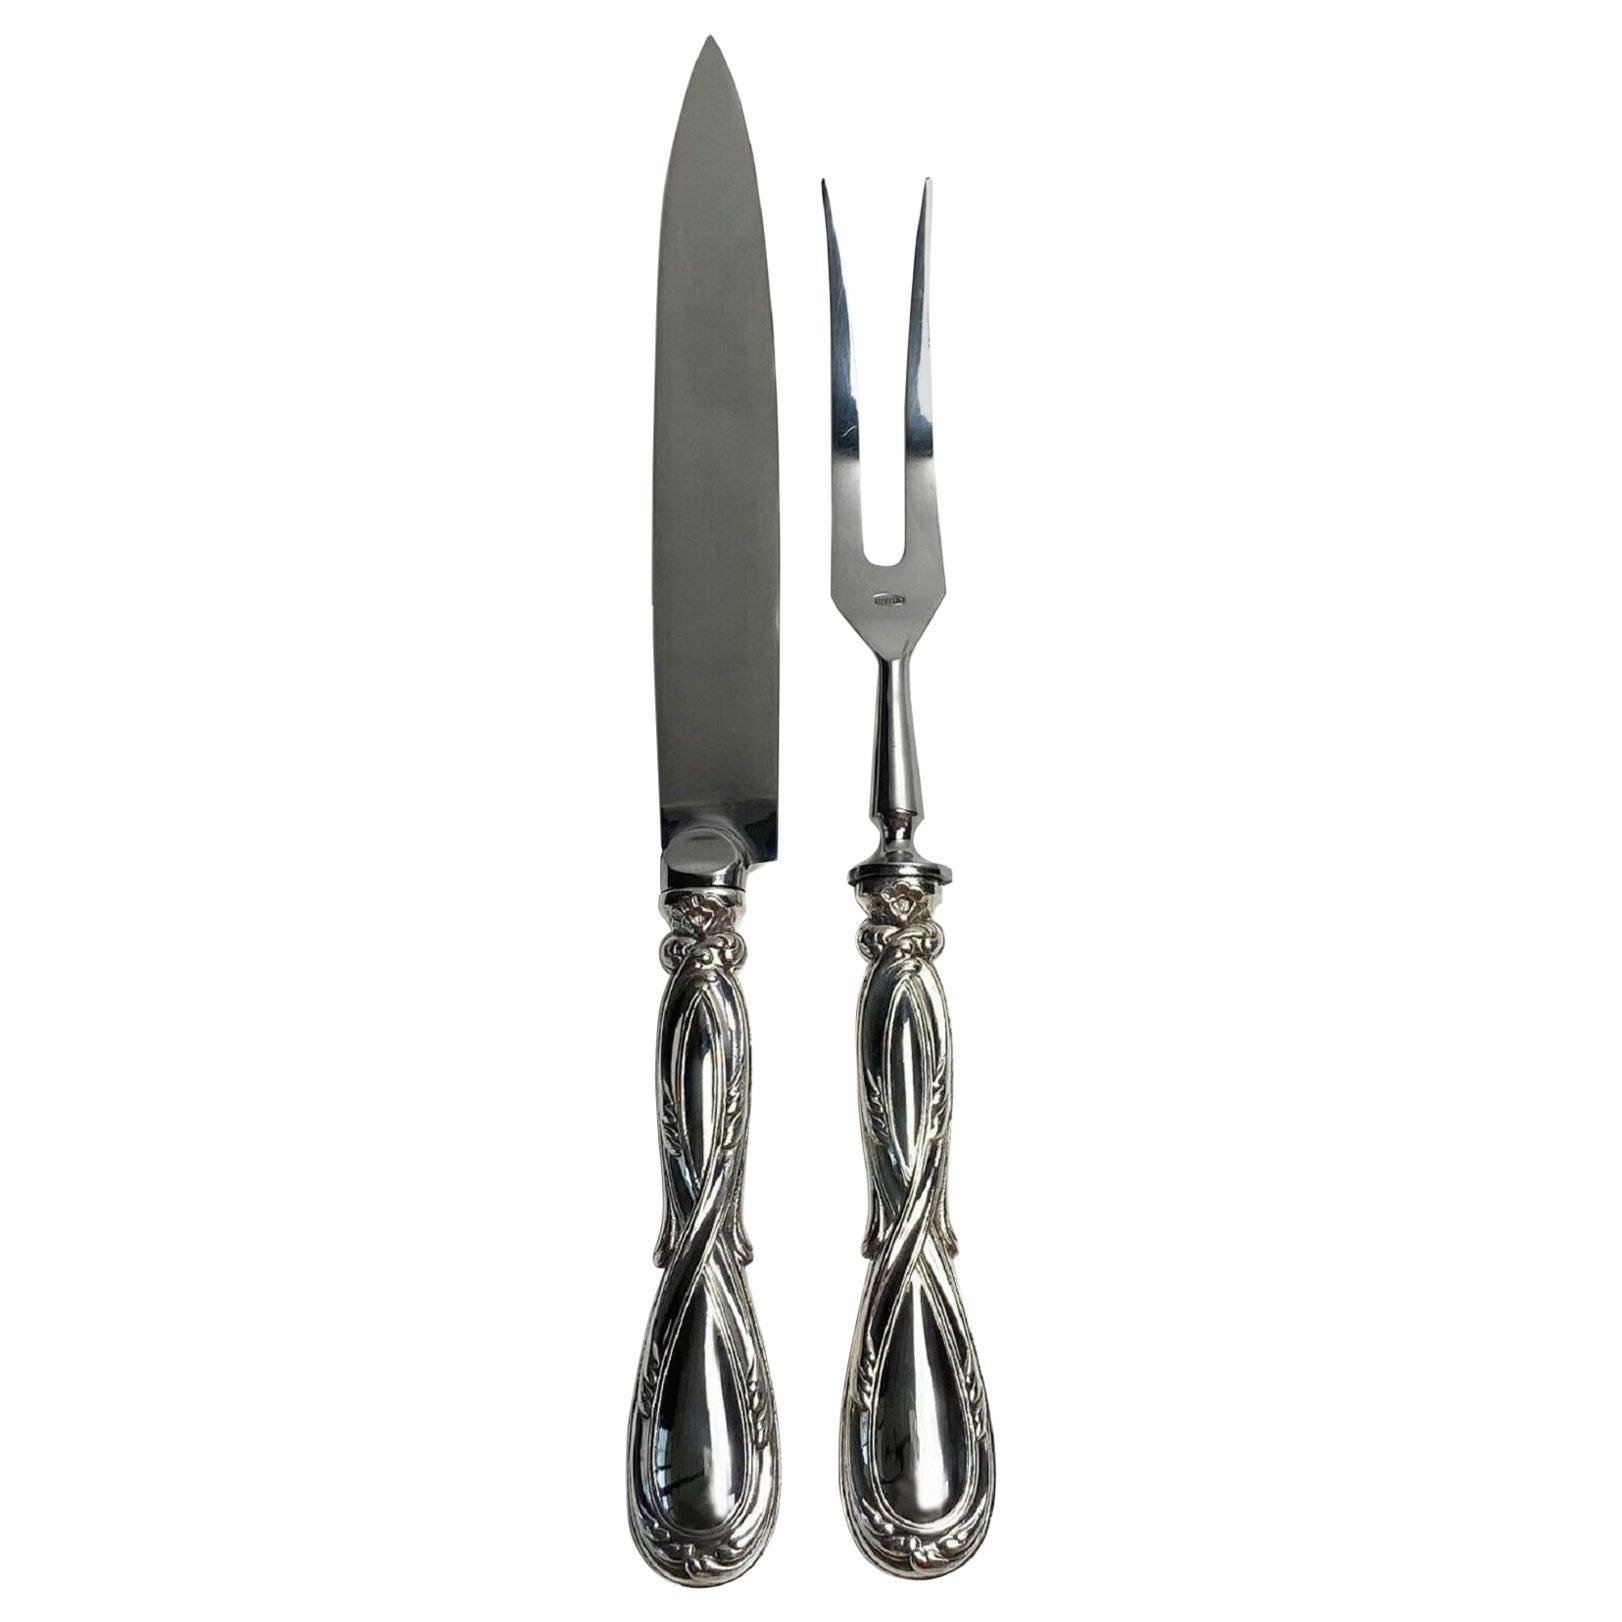 Pair Emile Puiforcat France Sterling Silver Carving Knife & Fork in Royal